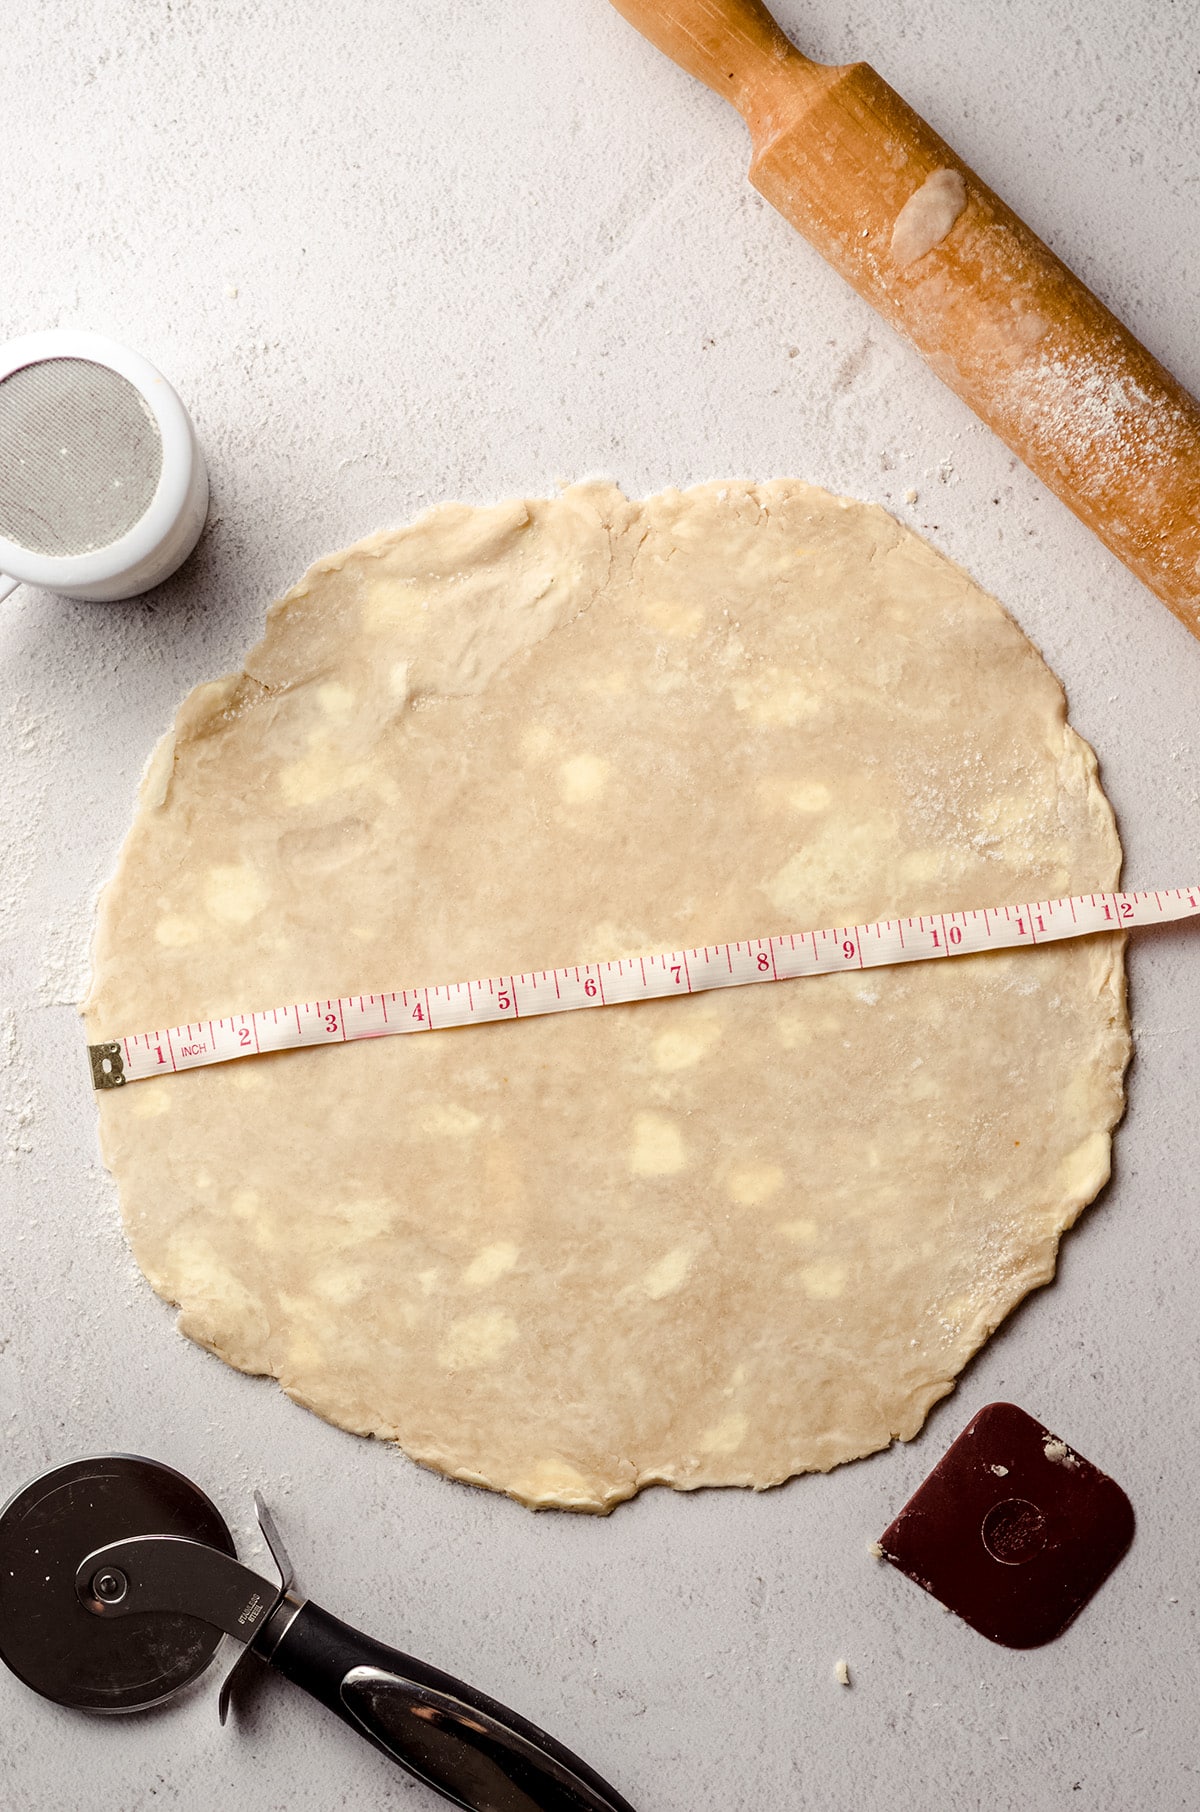 Measuring a round of pie dough.